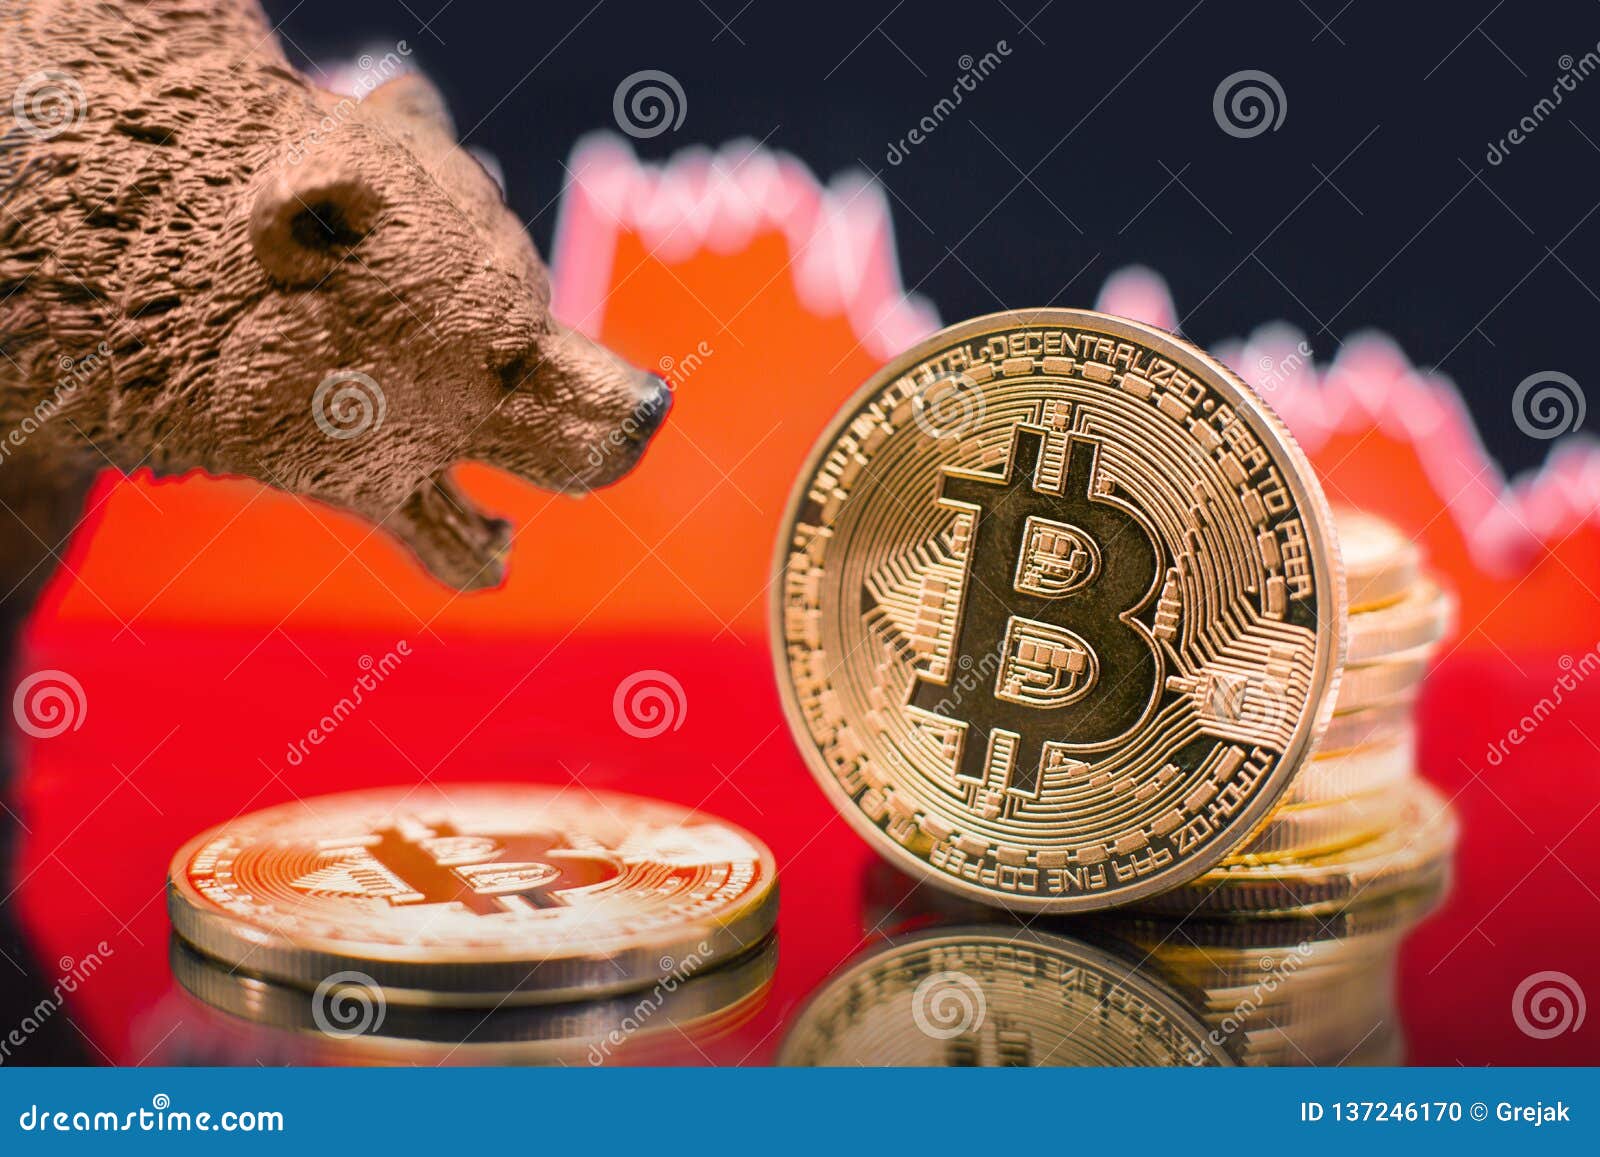 is crypto bearish now